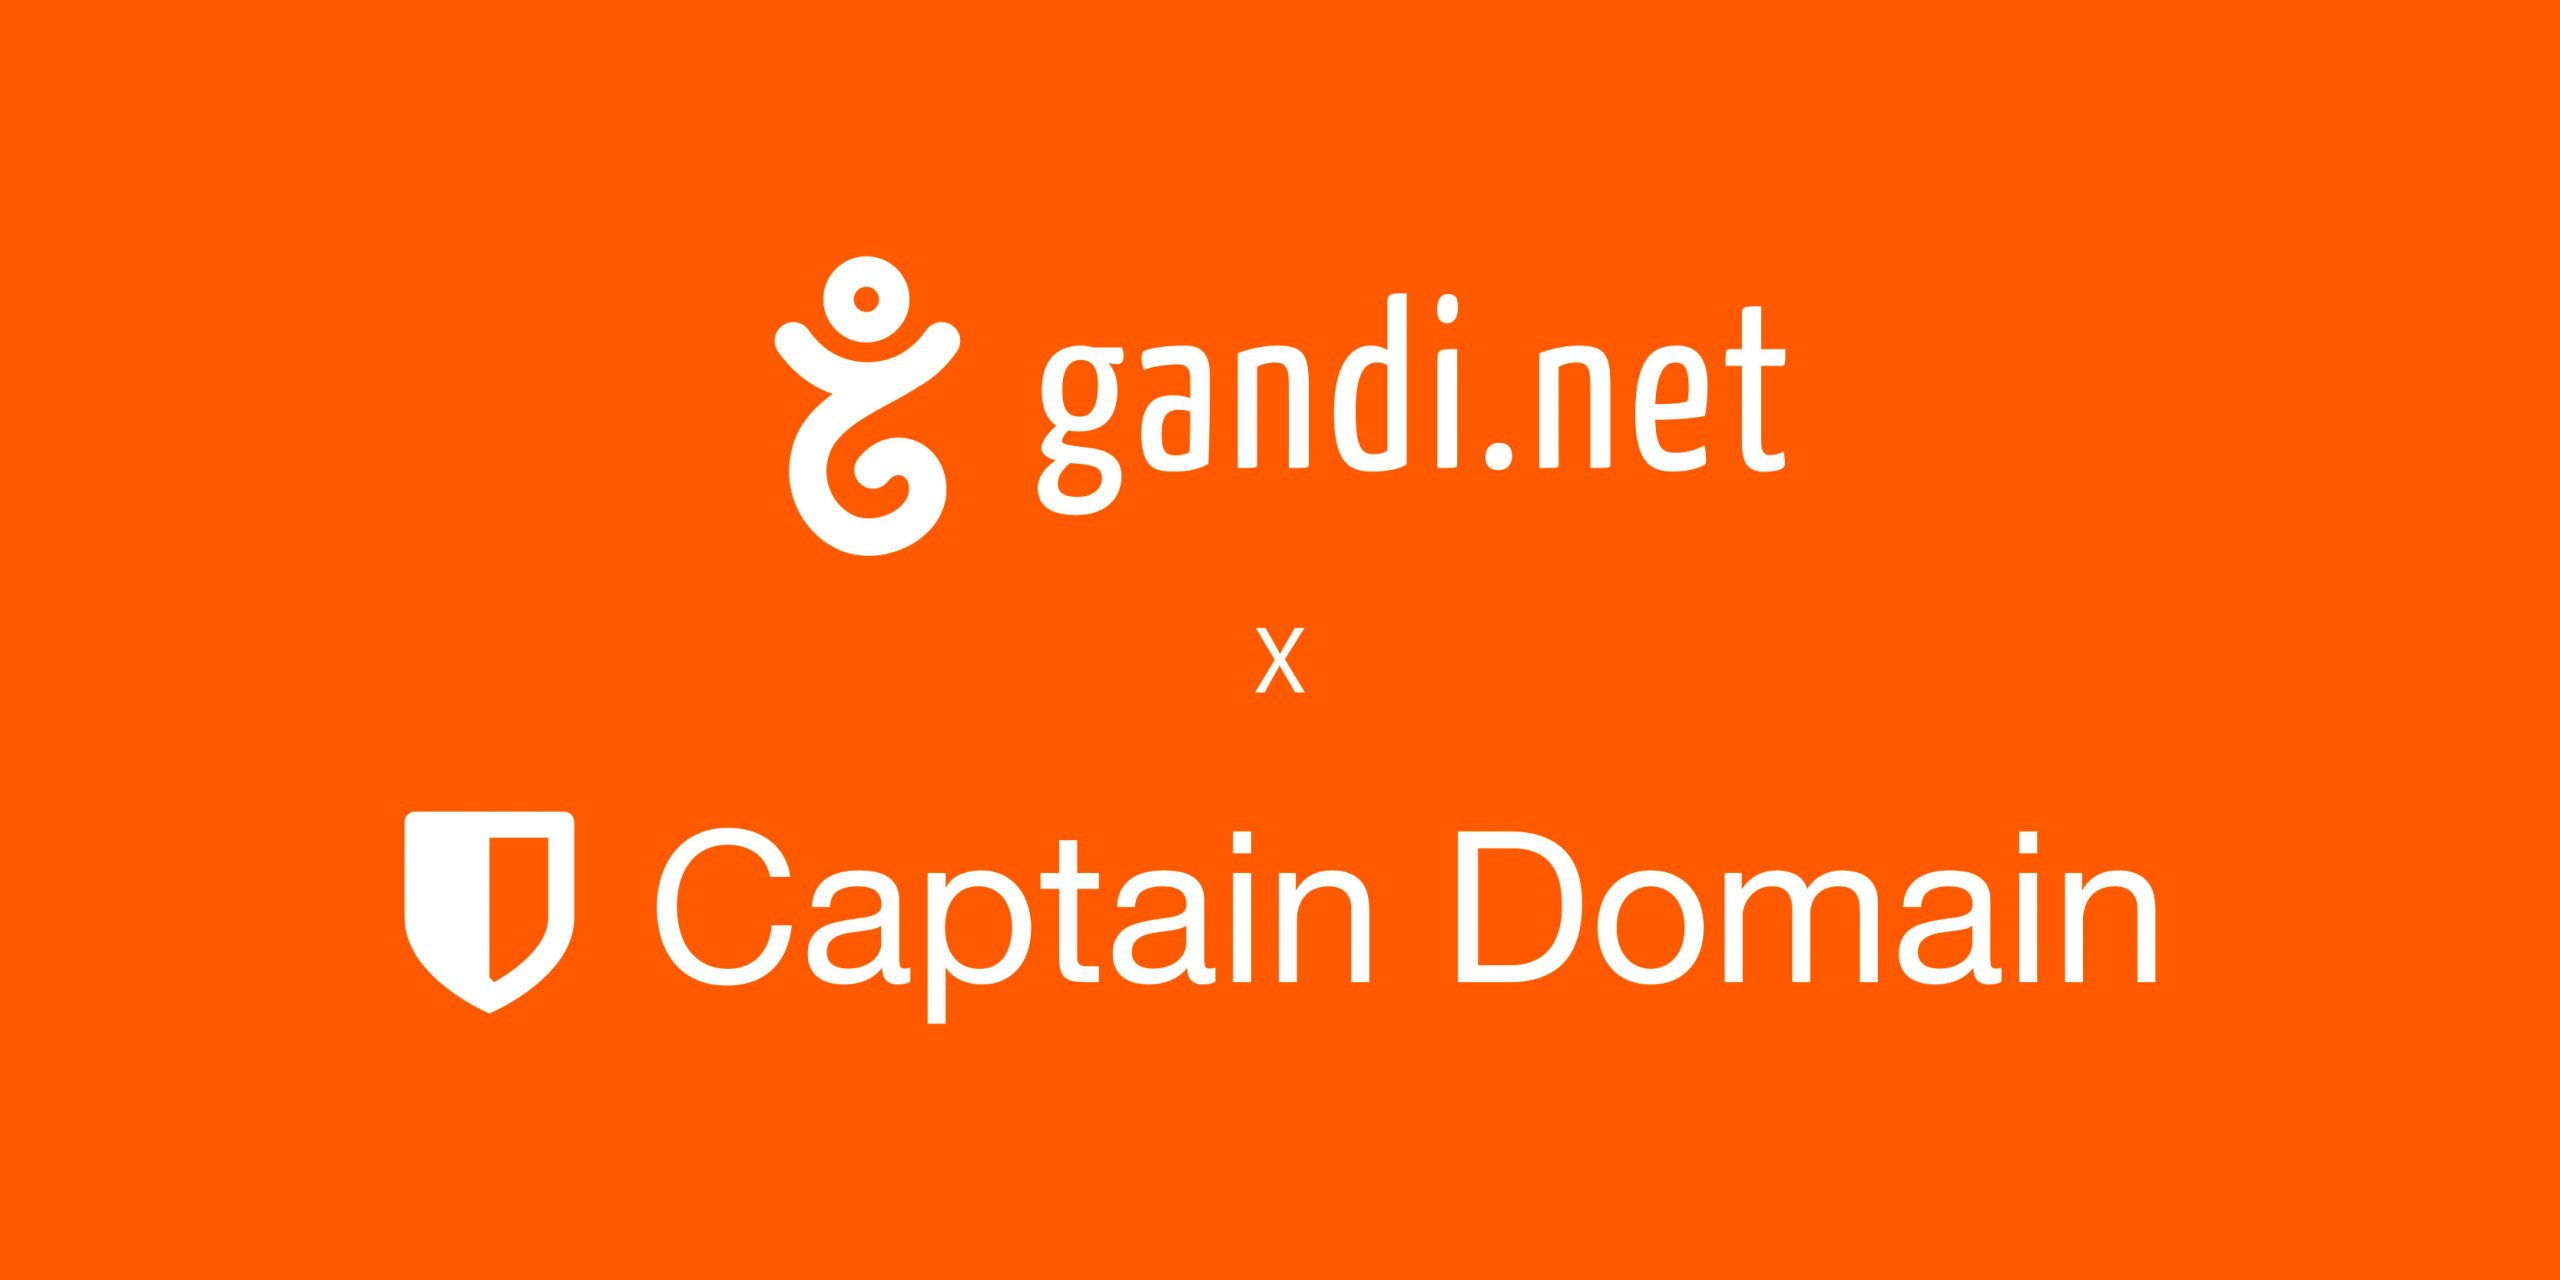 Gandi acquires Captain Domain monitoring service